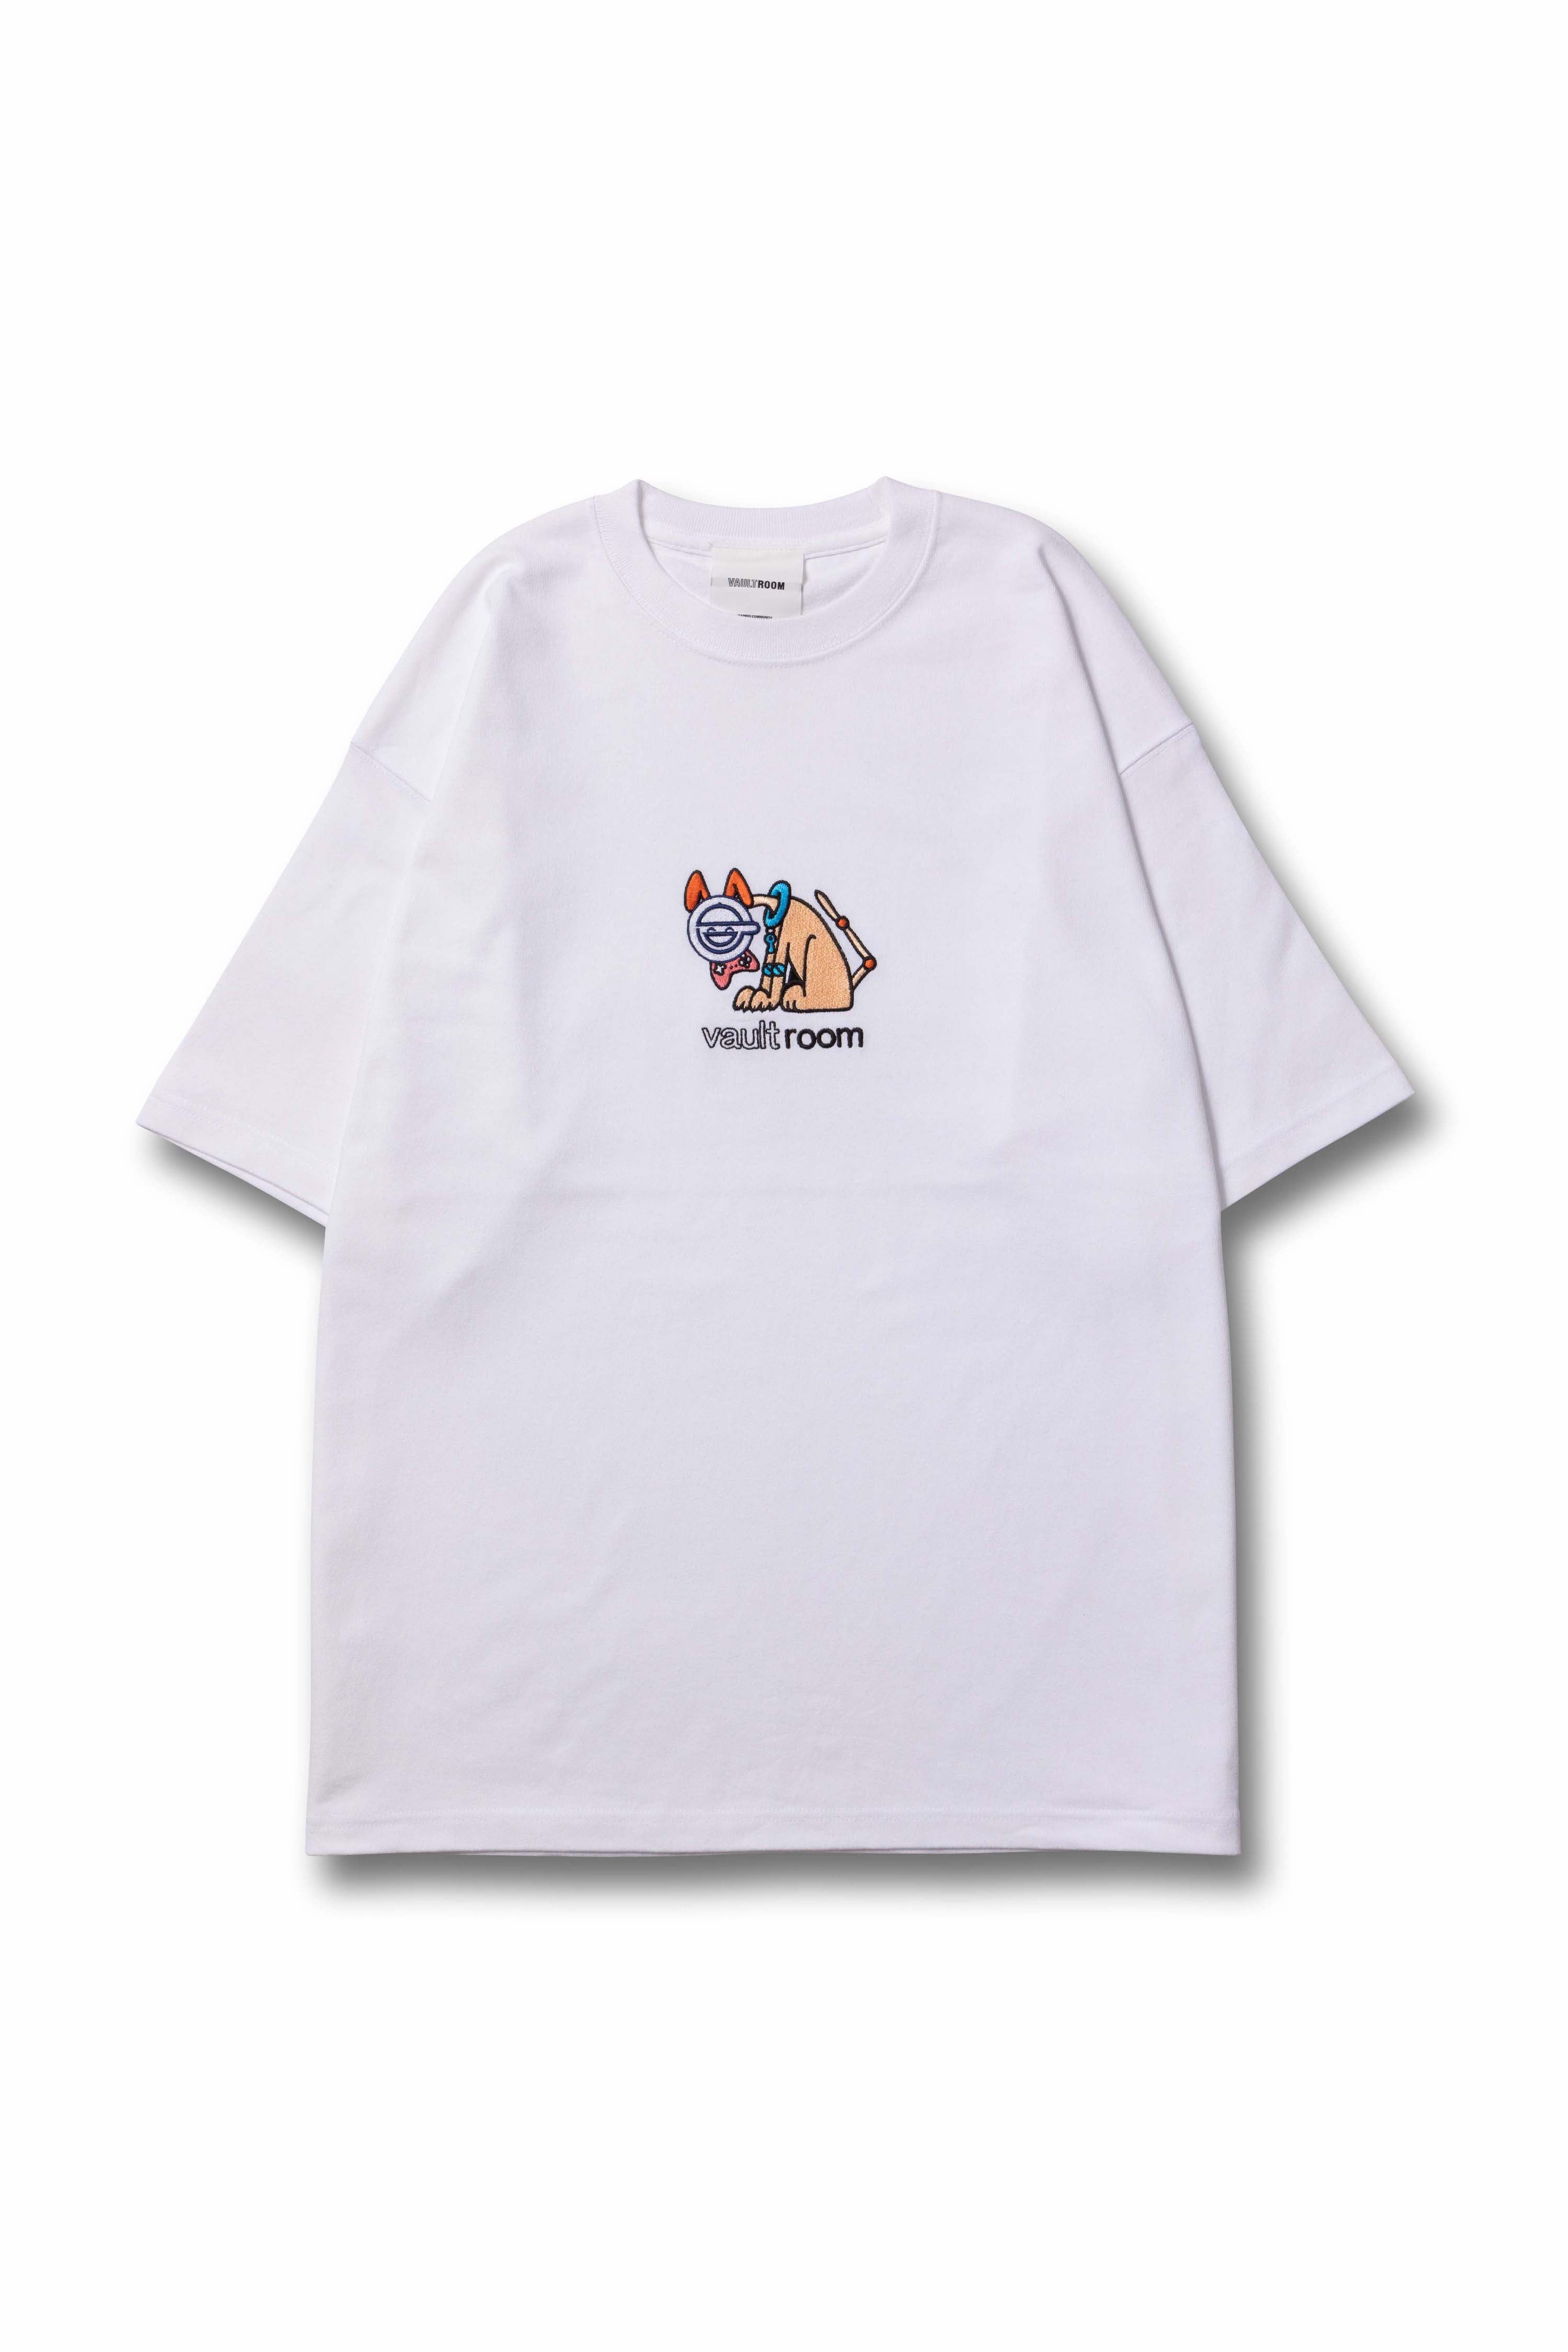 VAULT ROOM KEYDOG THE LAUGHING MAN TEE - Tシャツ/カットソー(半袖 